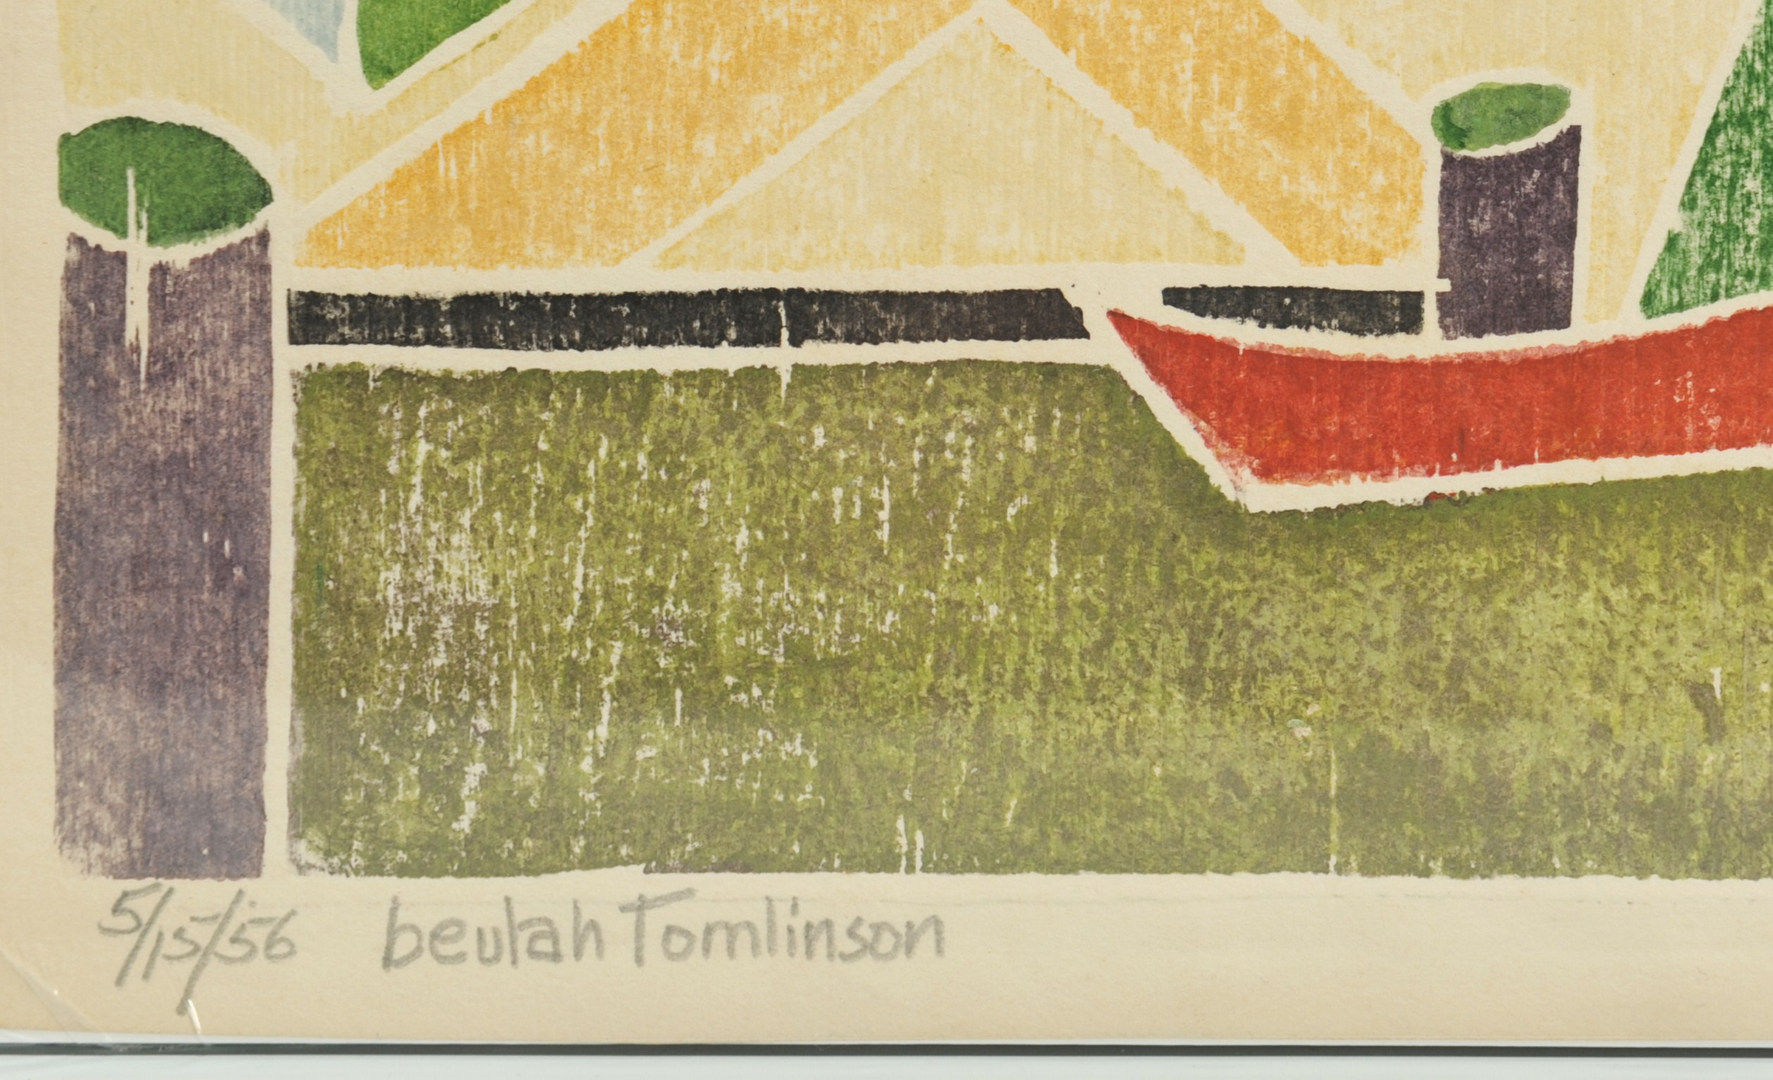 Lot 339: 2 Beulah Tomlinson Wood Cut Block Prints: Sea Hous